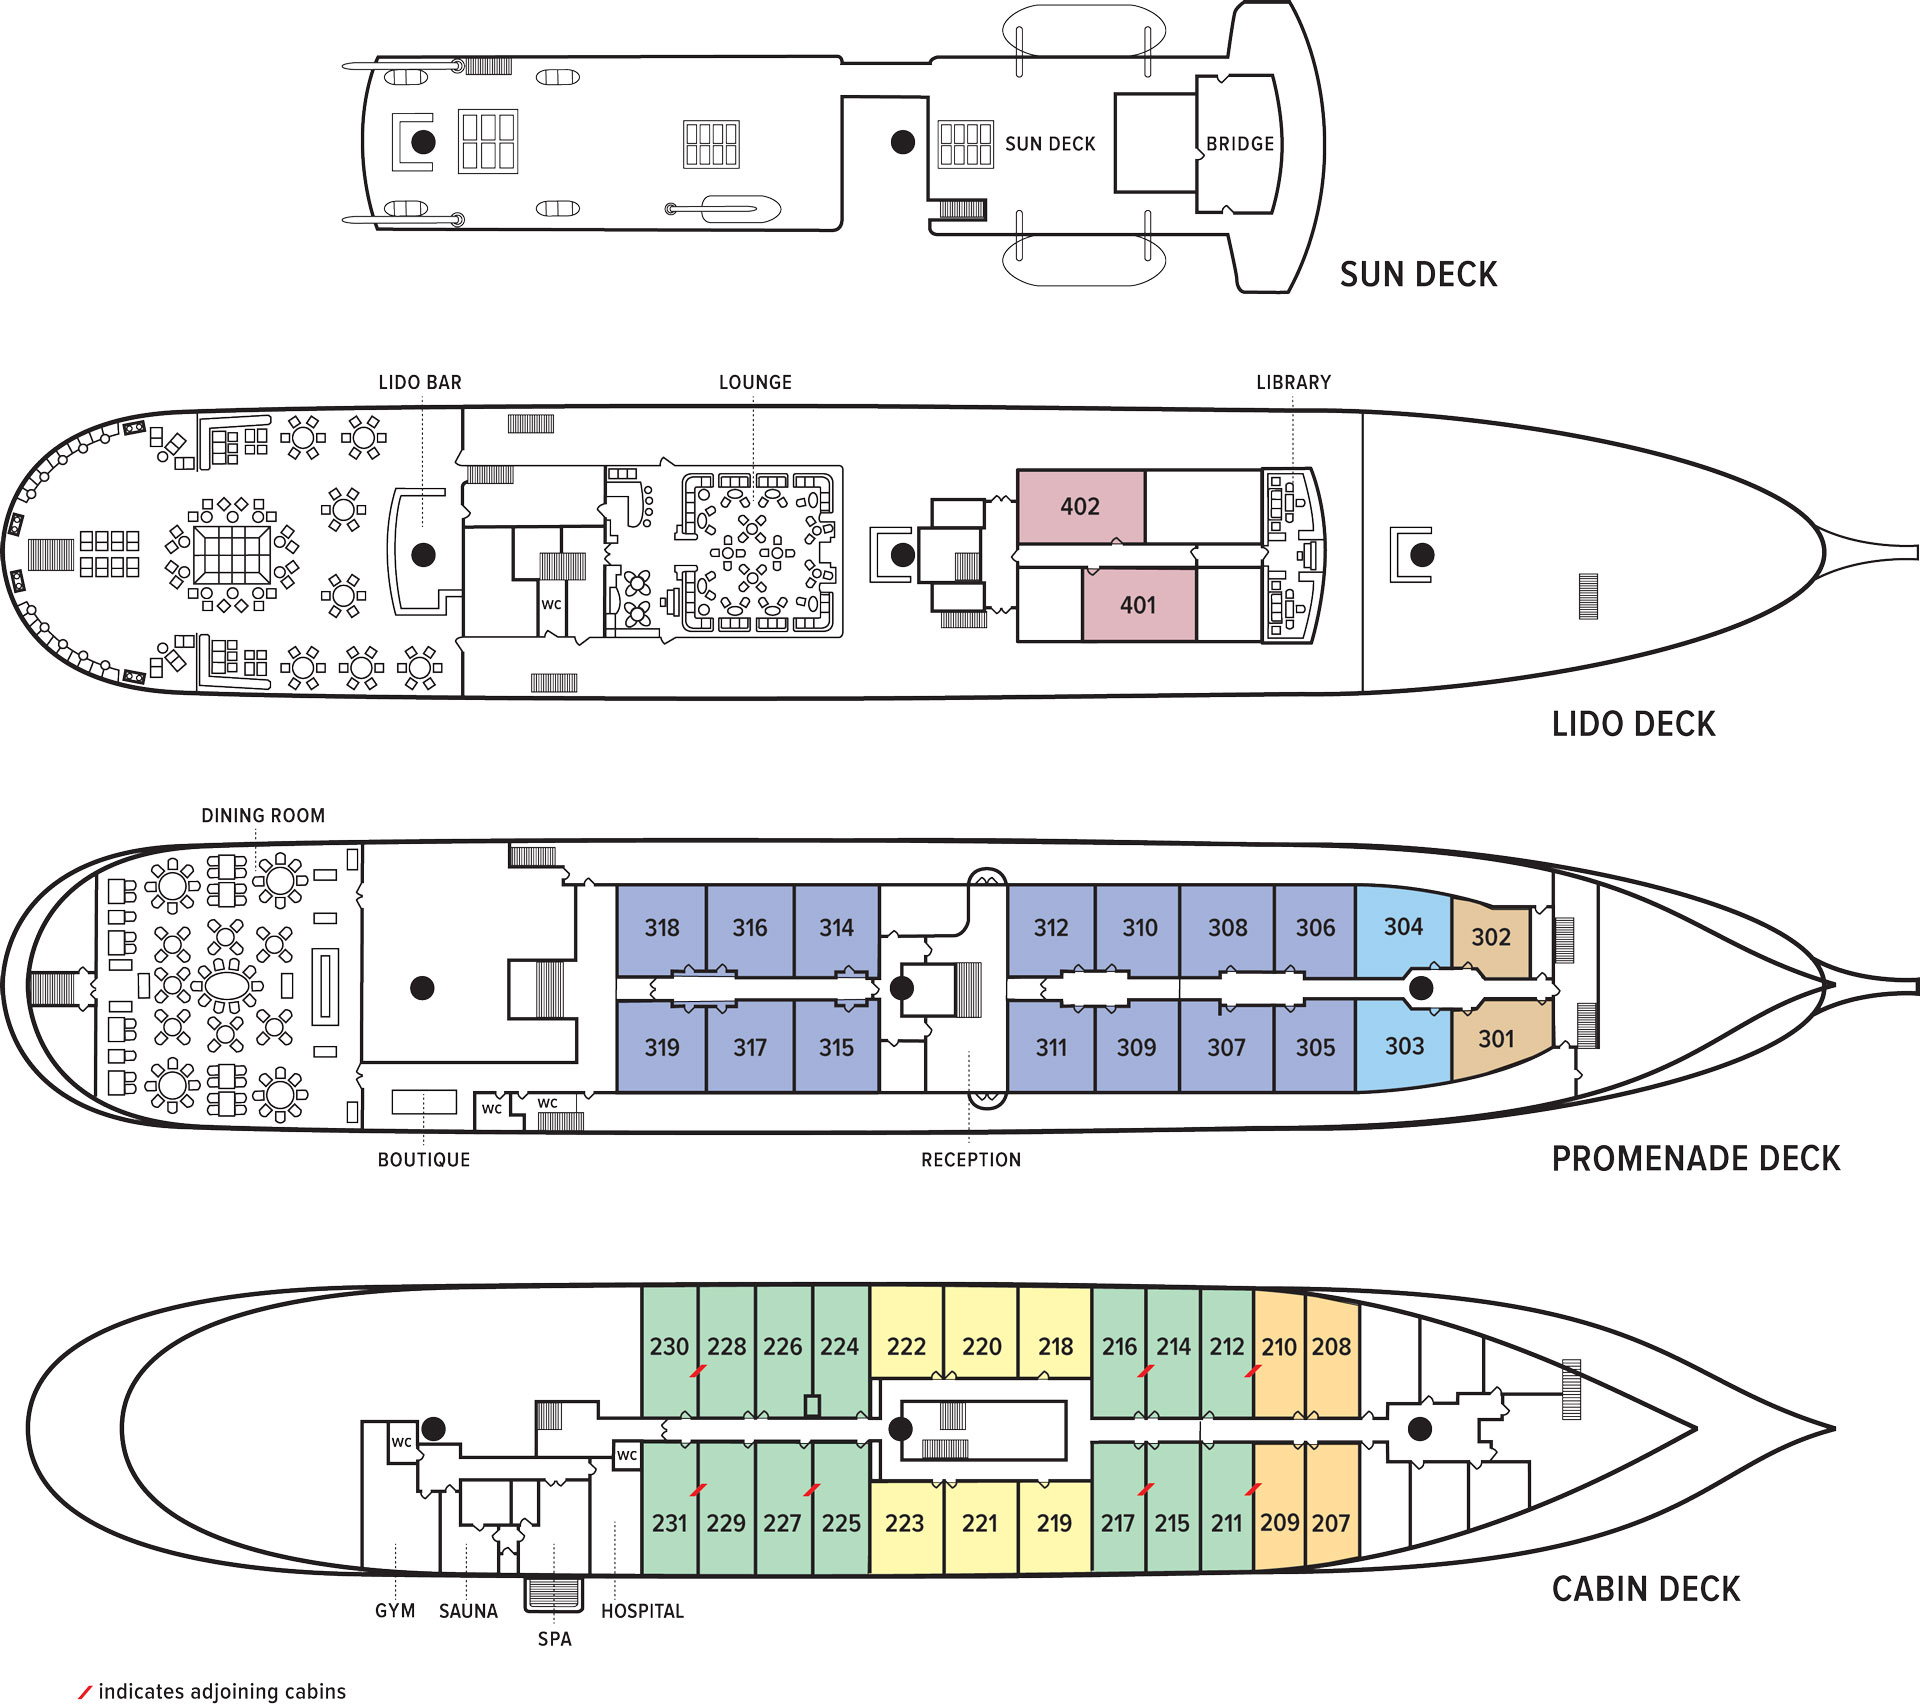 Deck plan of Sea Cloud II: Lindblad with 4 decks: Sun Deck, Lido Deck, Promenade Deck & Cabin Deck, cabins for 94 guests, lounge, bar, library, dining room, bridge, gym, sauna, spa & more.